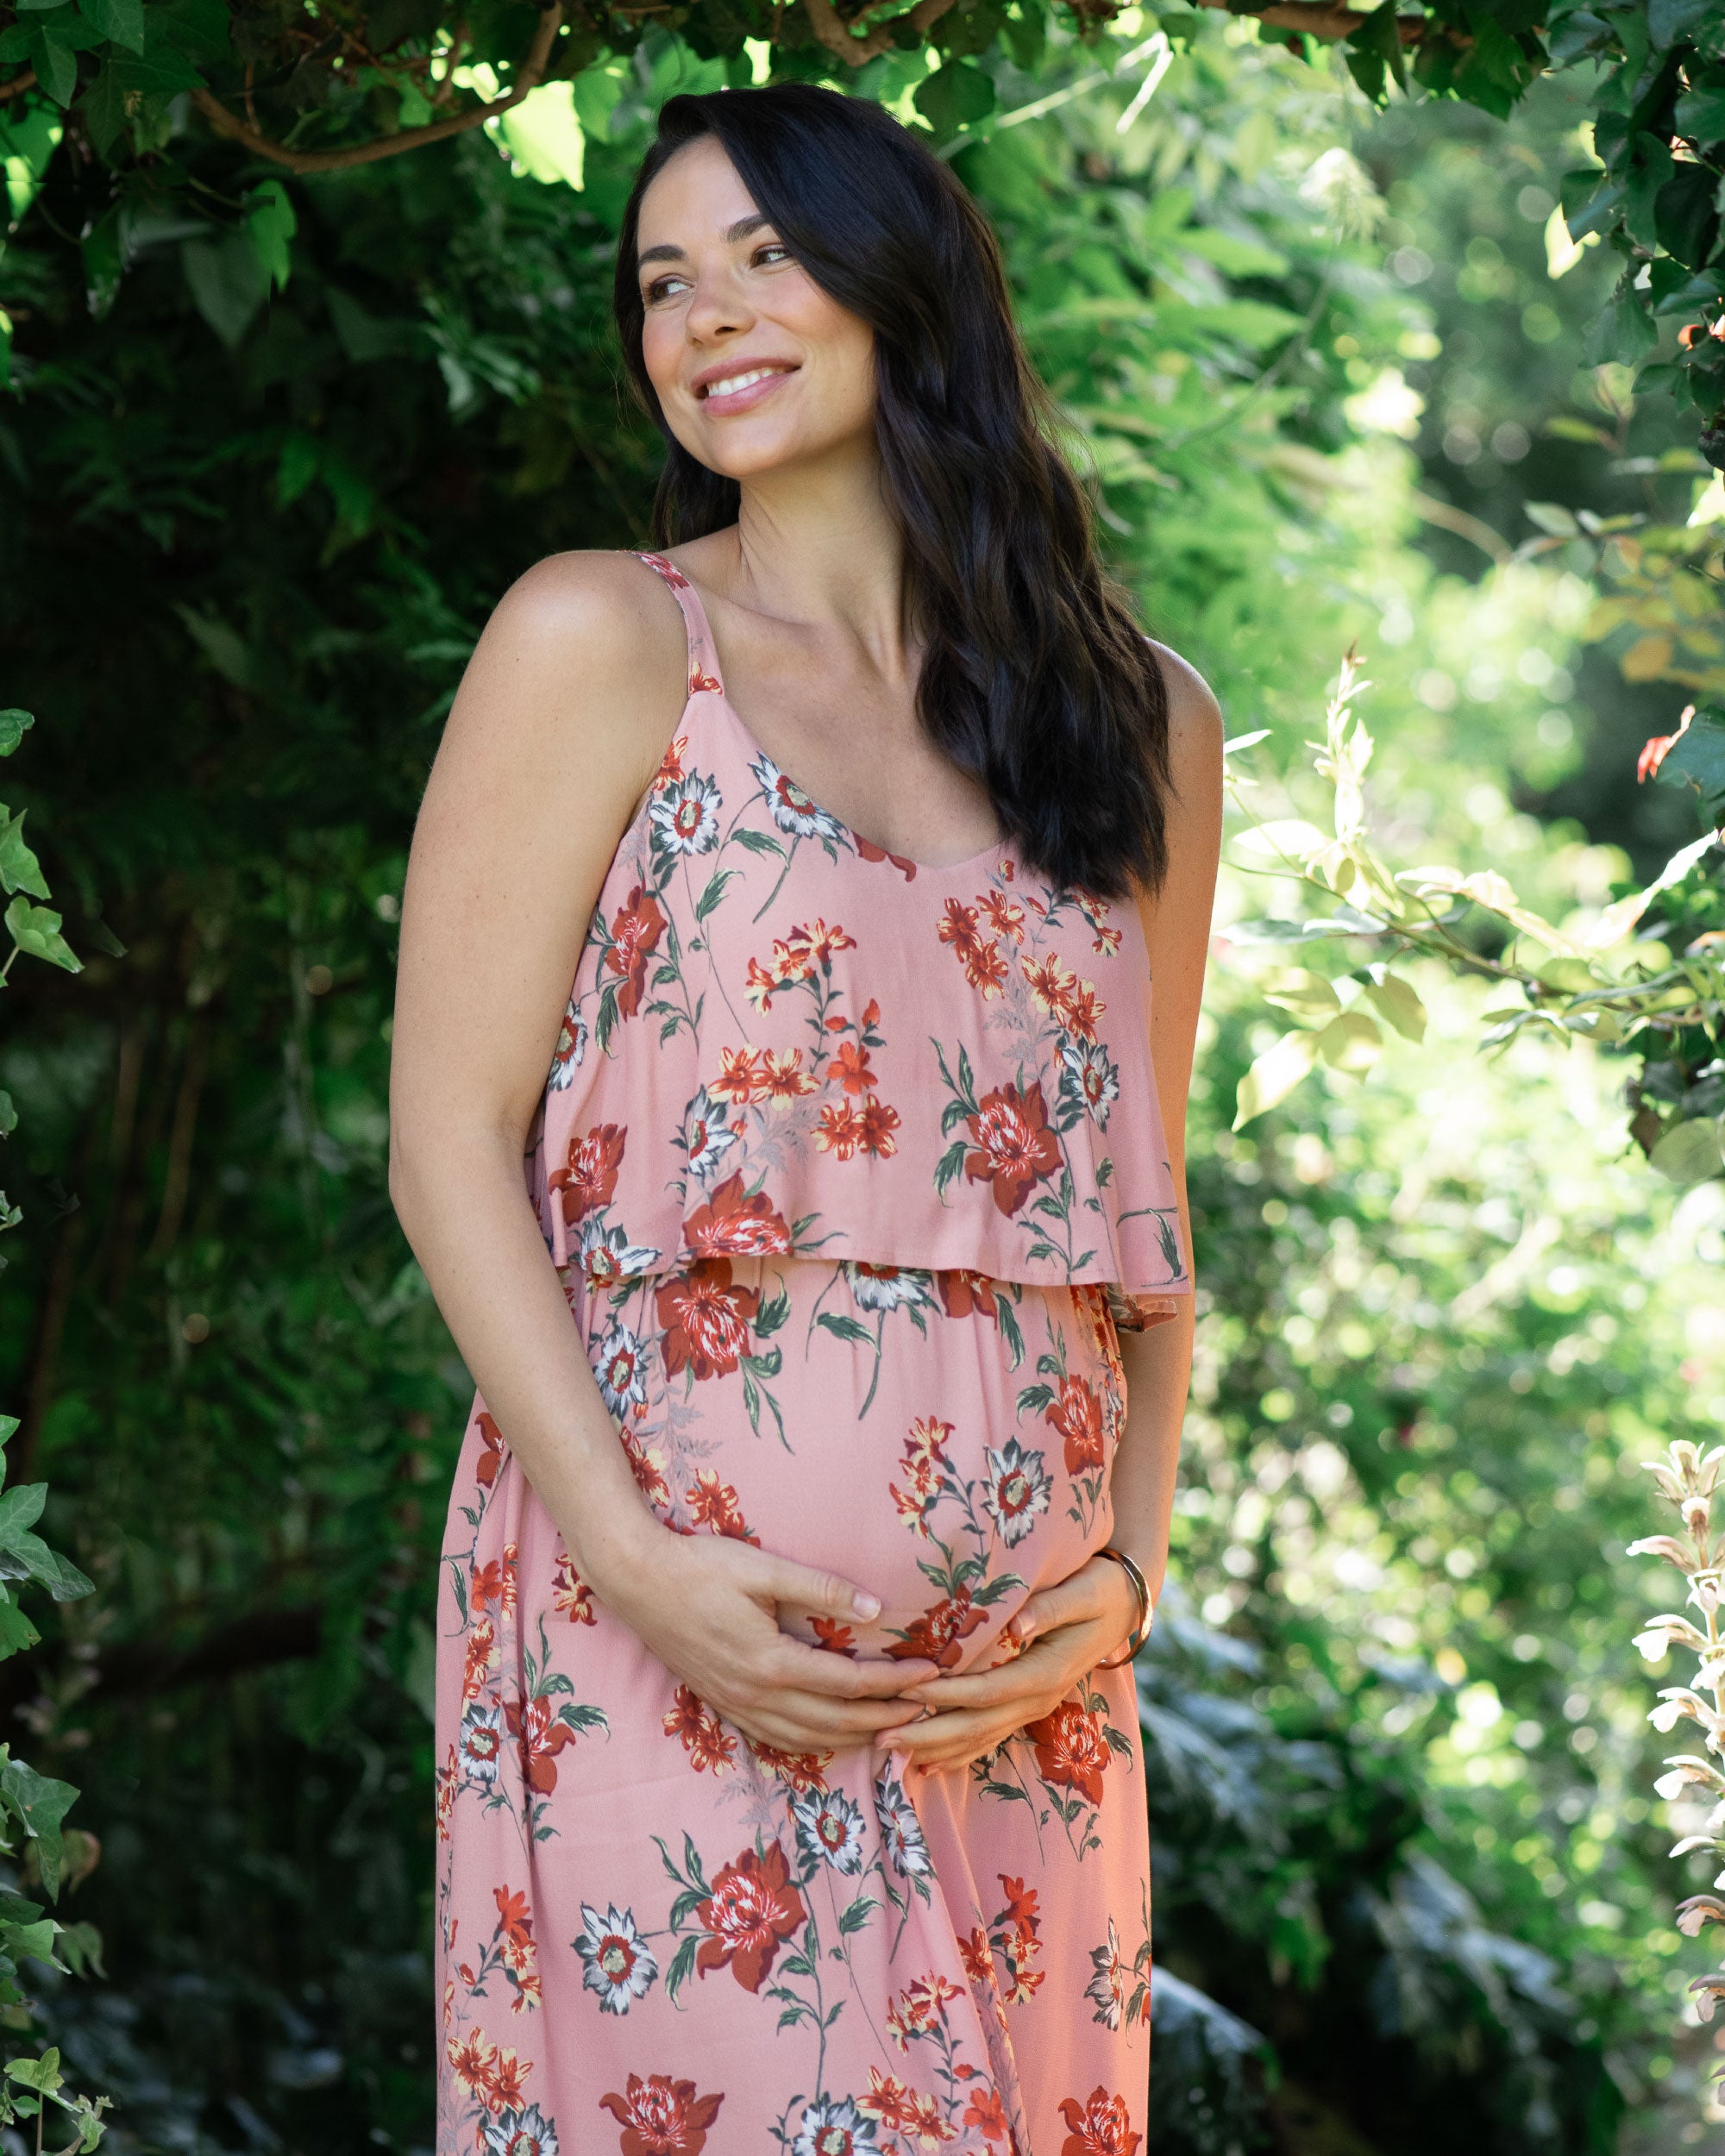 Buy online maternity dresses, pregnancy & nursing wear– MOMZJOY.COM